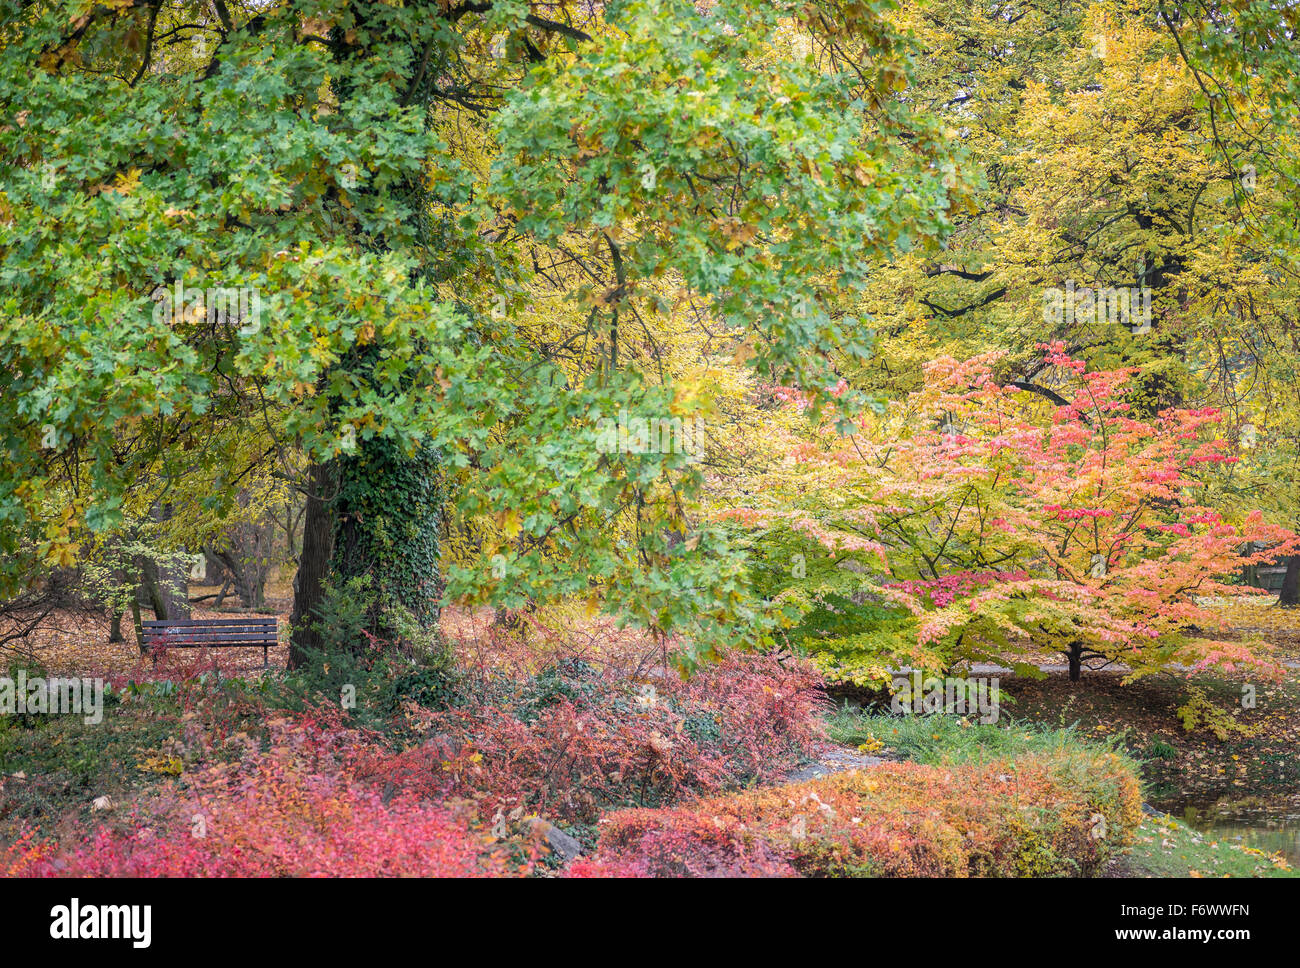 Multicolor autumn fall foliage on the trees and bushes Stock Photo